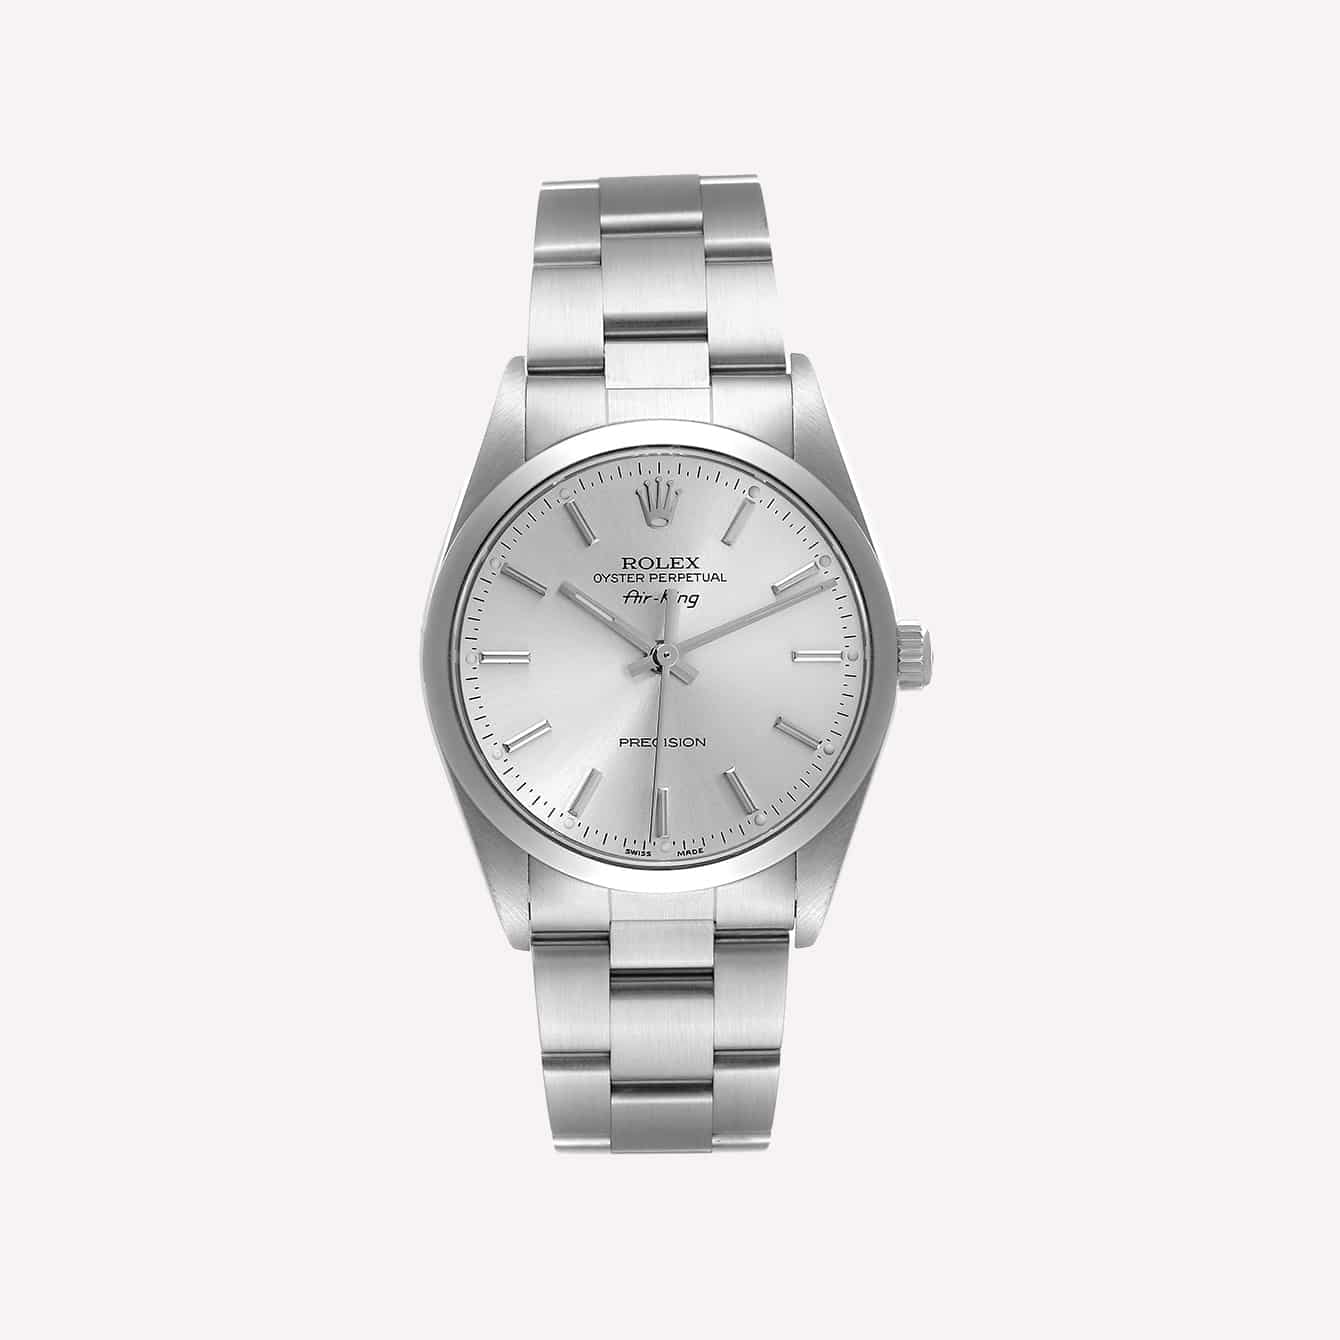 Rolex Air King 14000 Watch